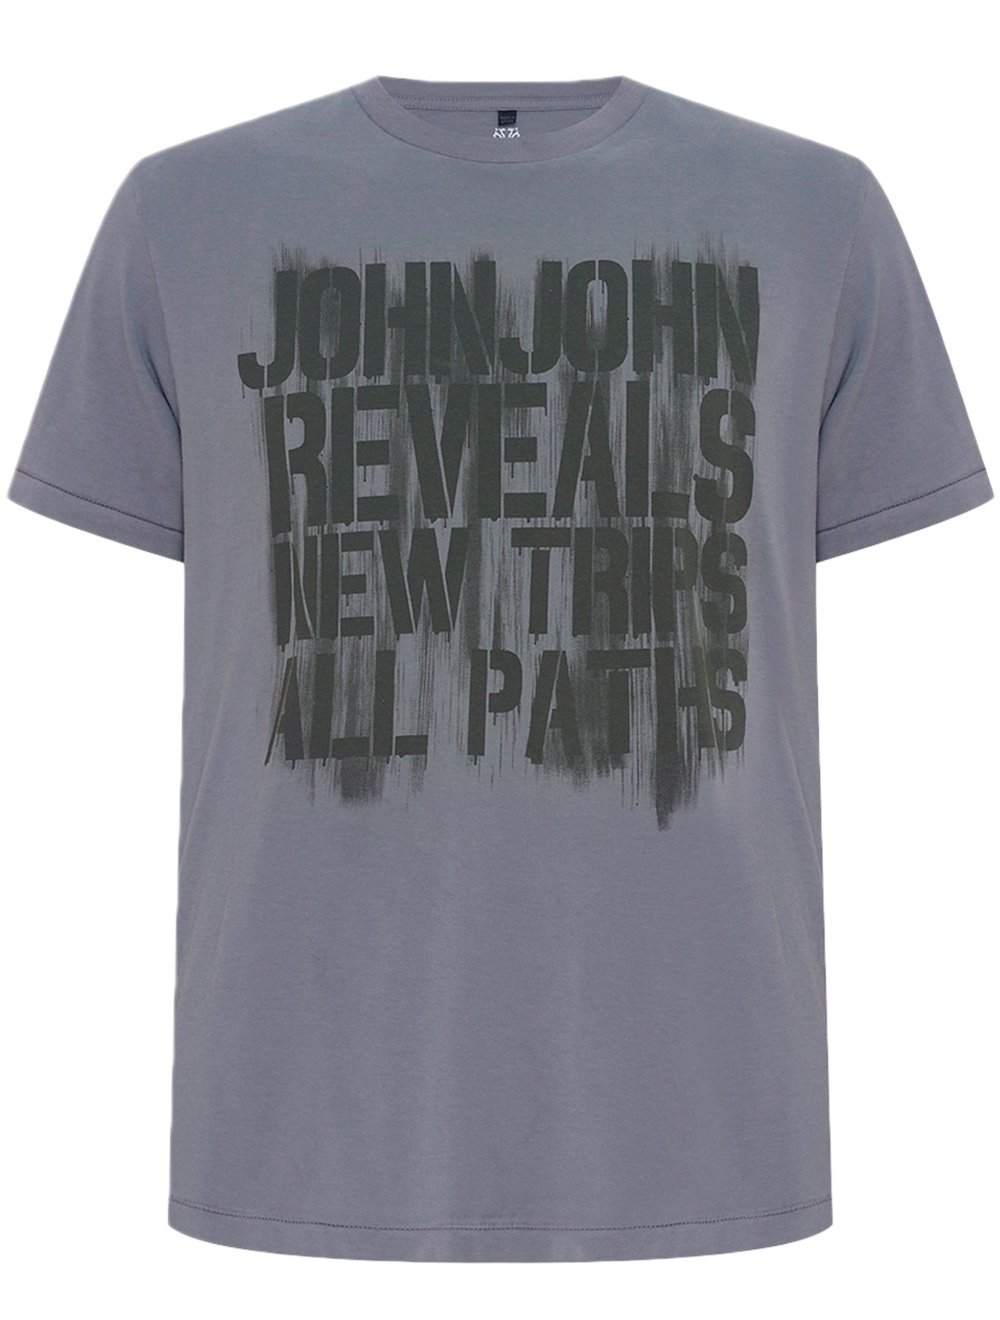 Camiseta John John Masculina Rg Reveals Cinza Brisk